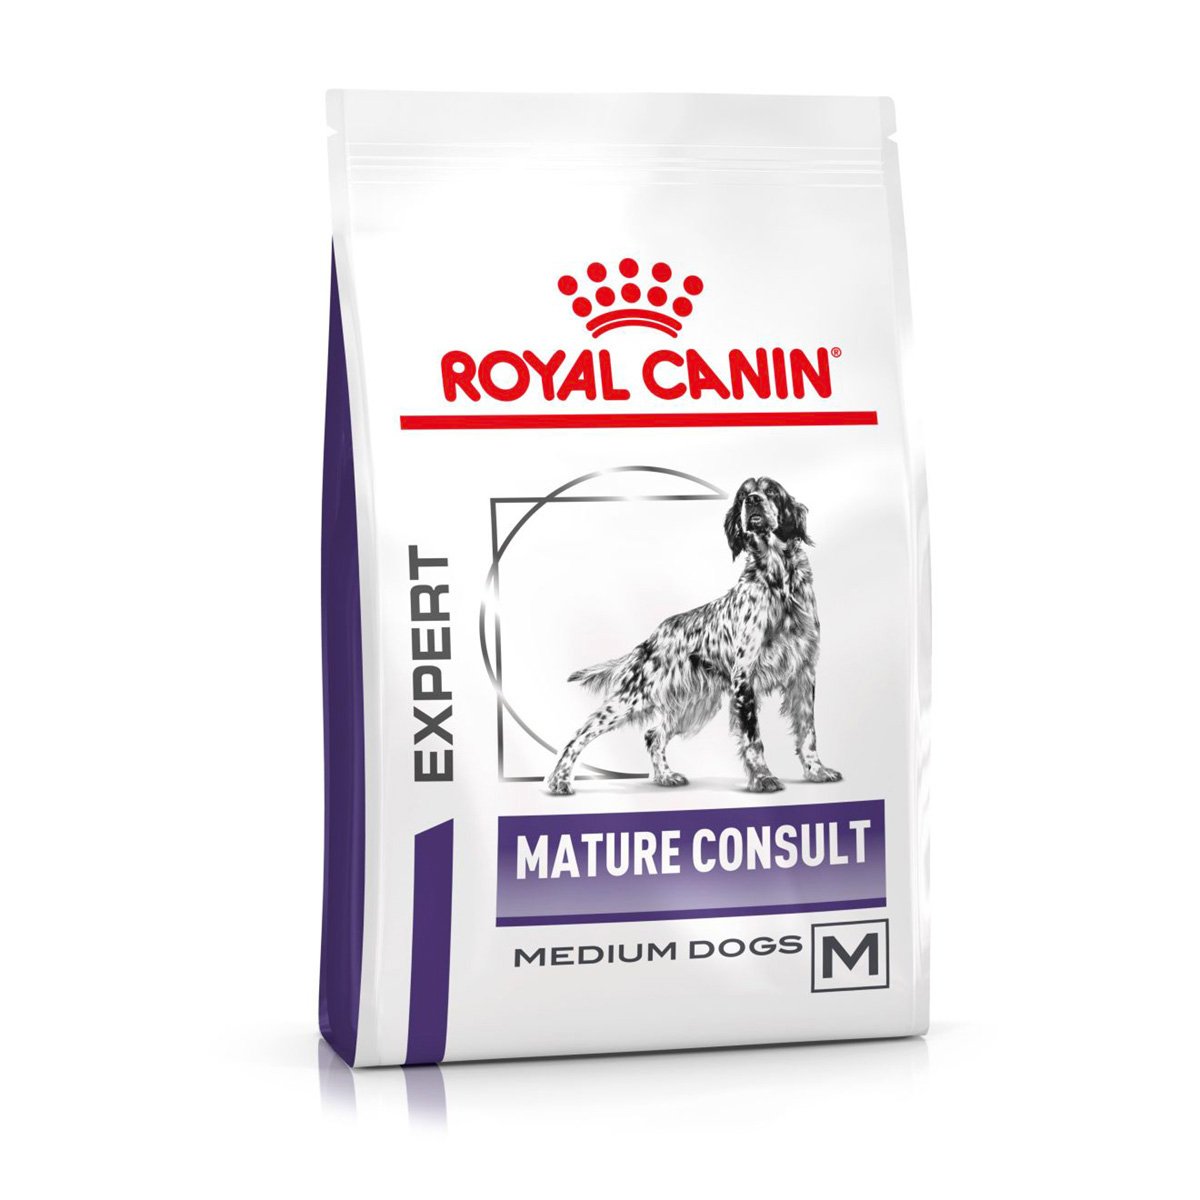 ROYAL CANIN® Expert MATURE CONSULT MEDIUM DOGS Trockenfutter für Hunde 10kg von Royal Canin